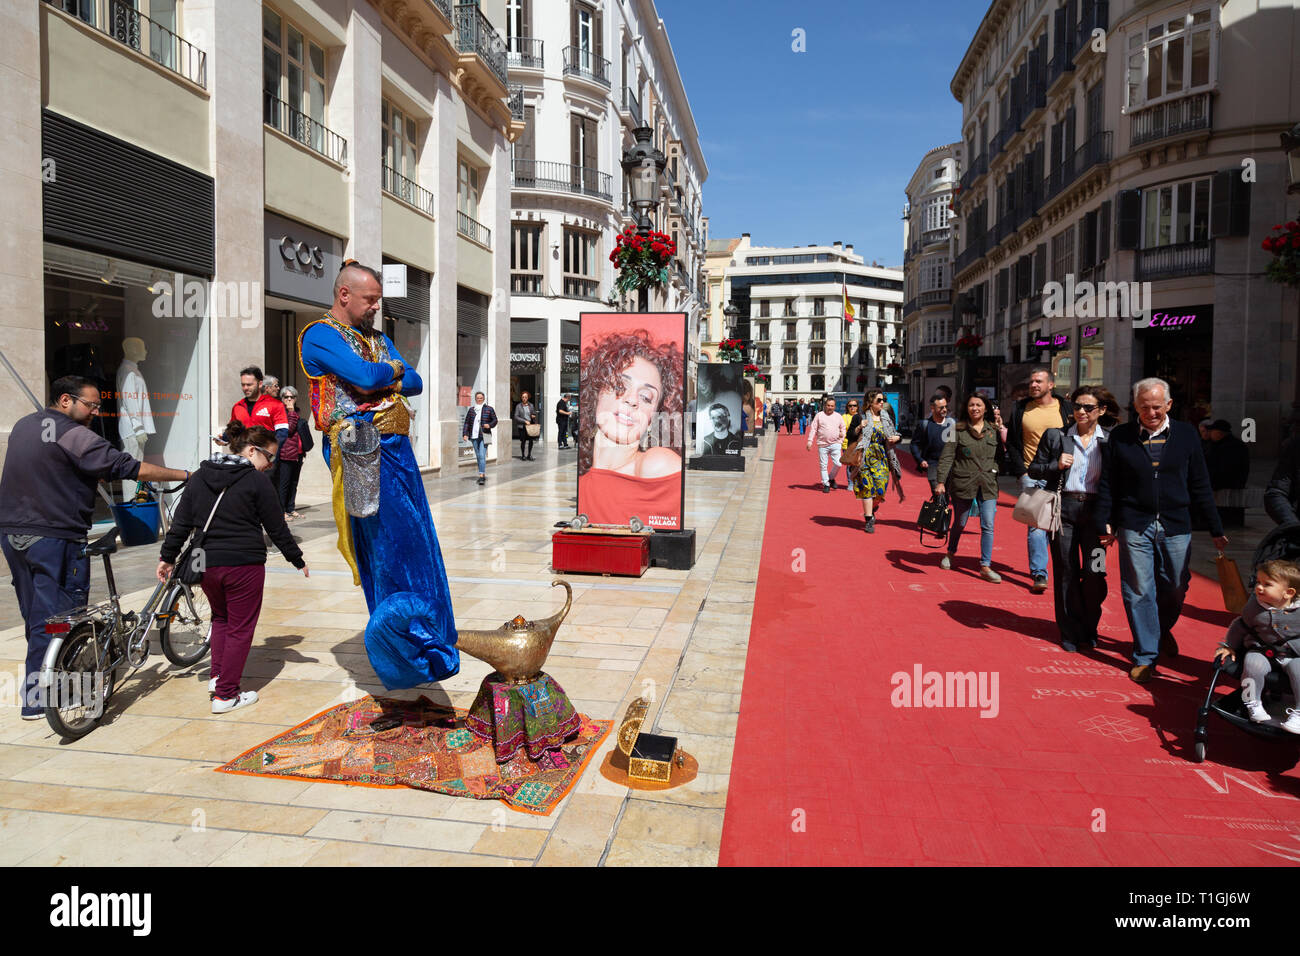 Spain Street entertainer impersonating Aladdin's Genie, Malaga, Andalusia, Spain Europe Stock Photo